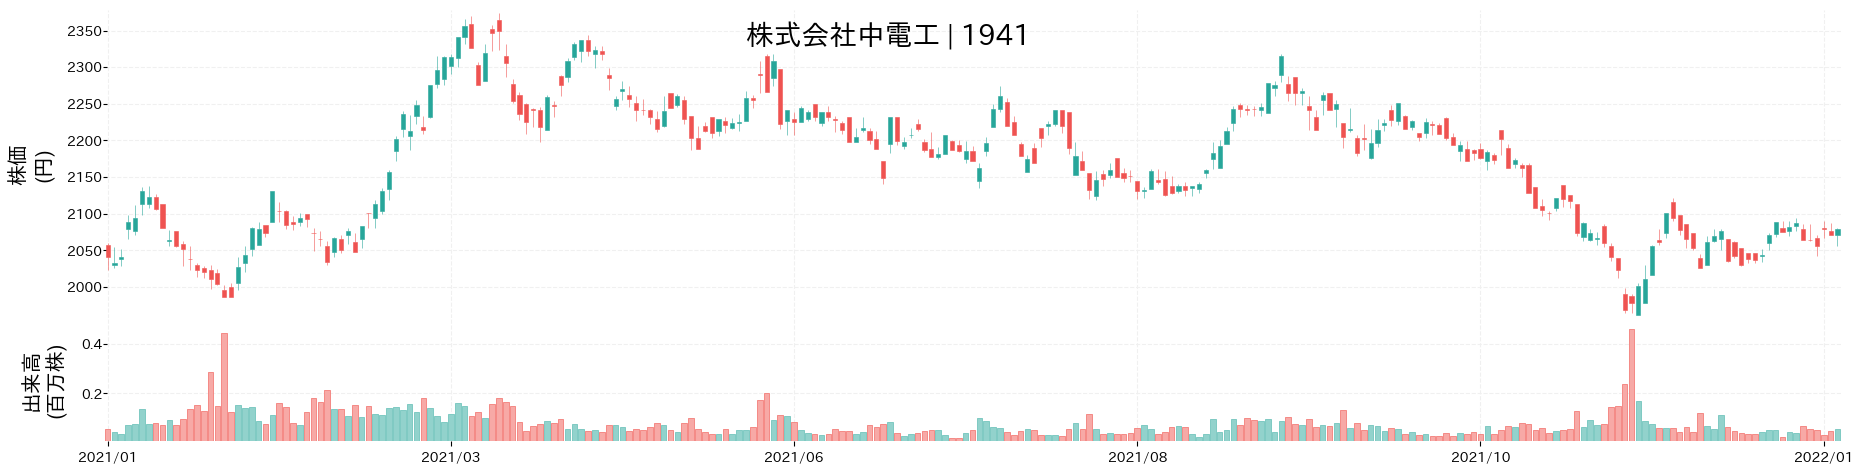 中電工の株価推移(2021)